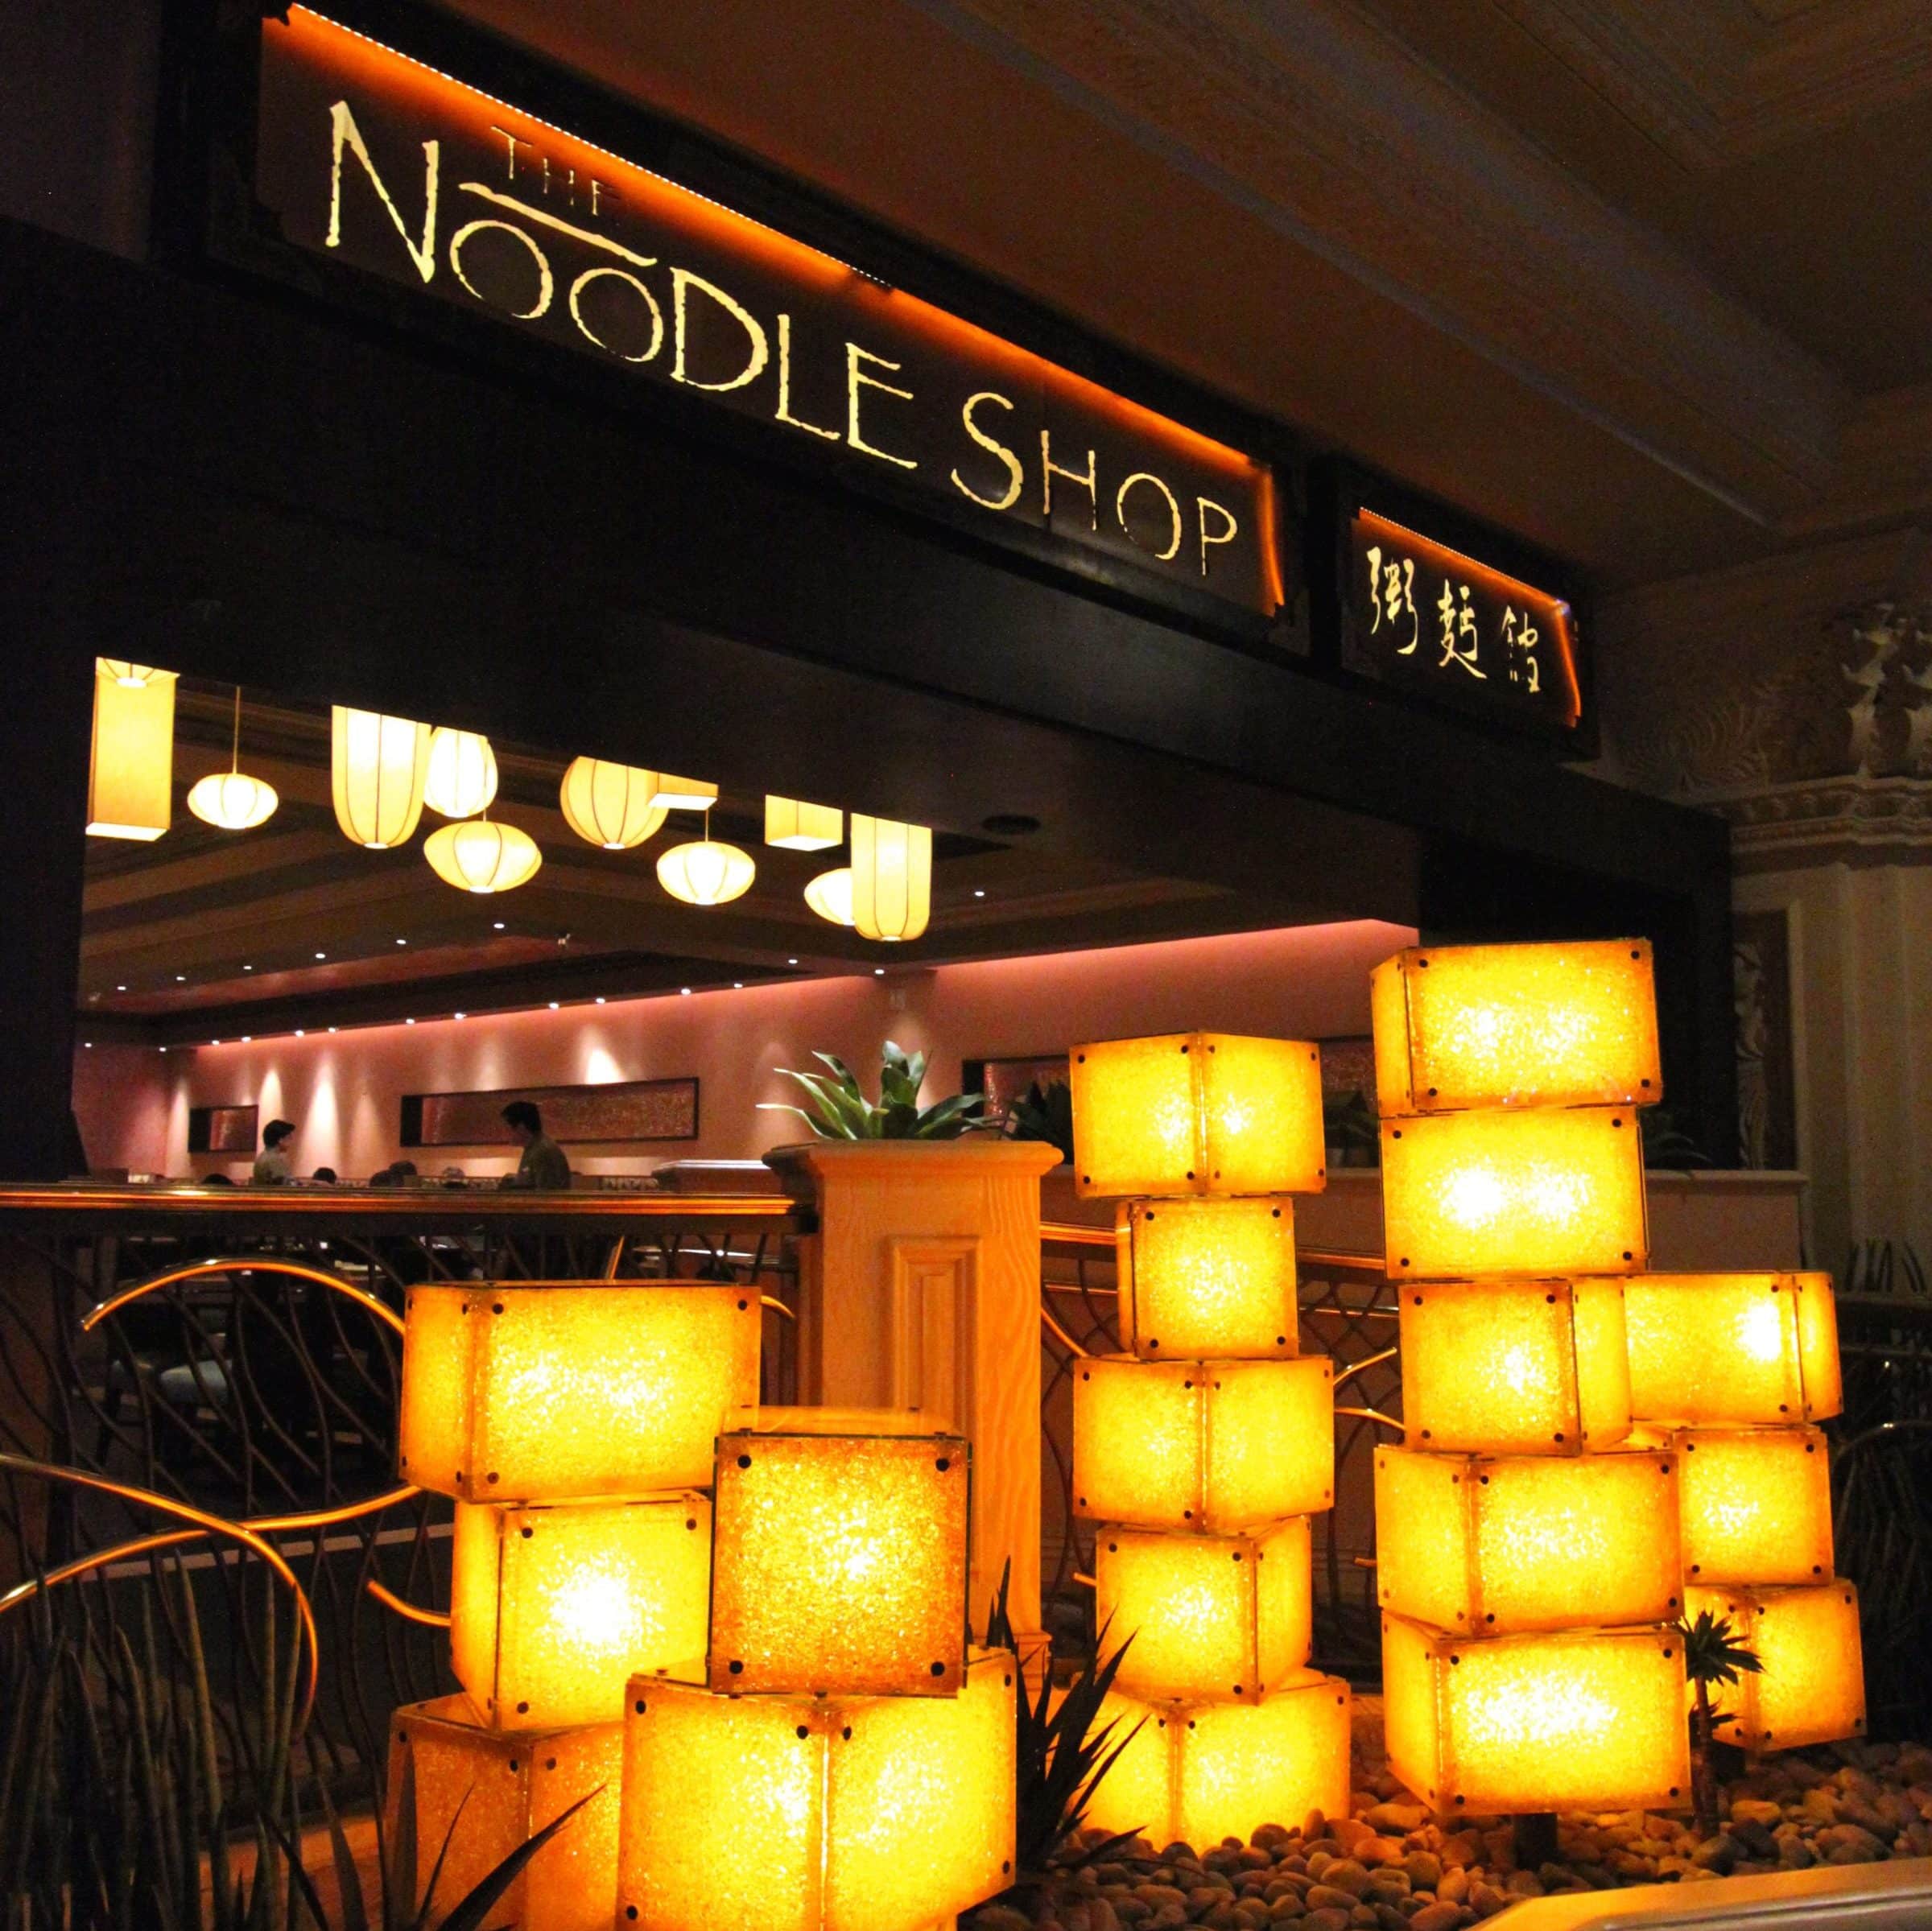 noodle shop mandalay bay edited